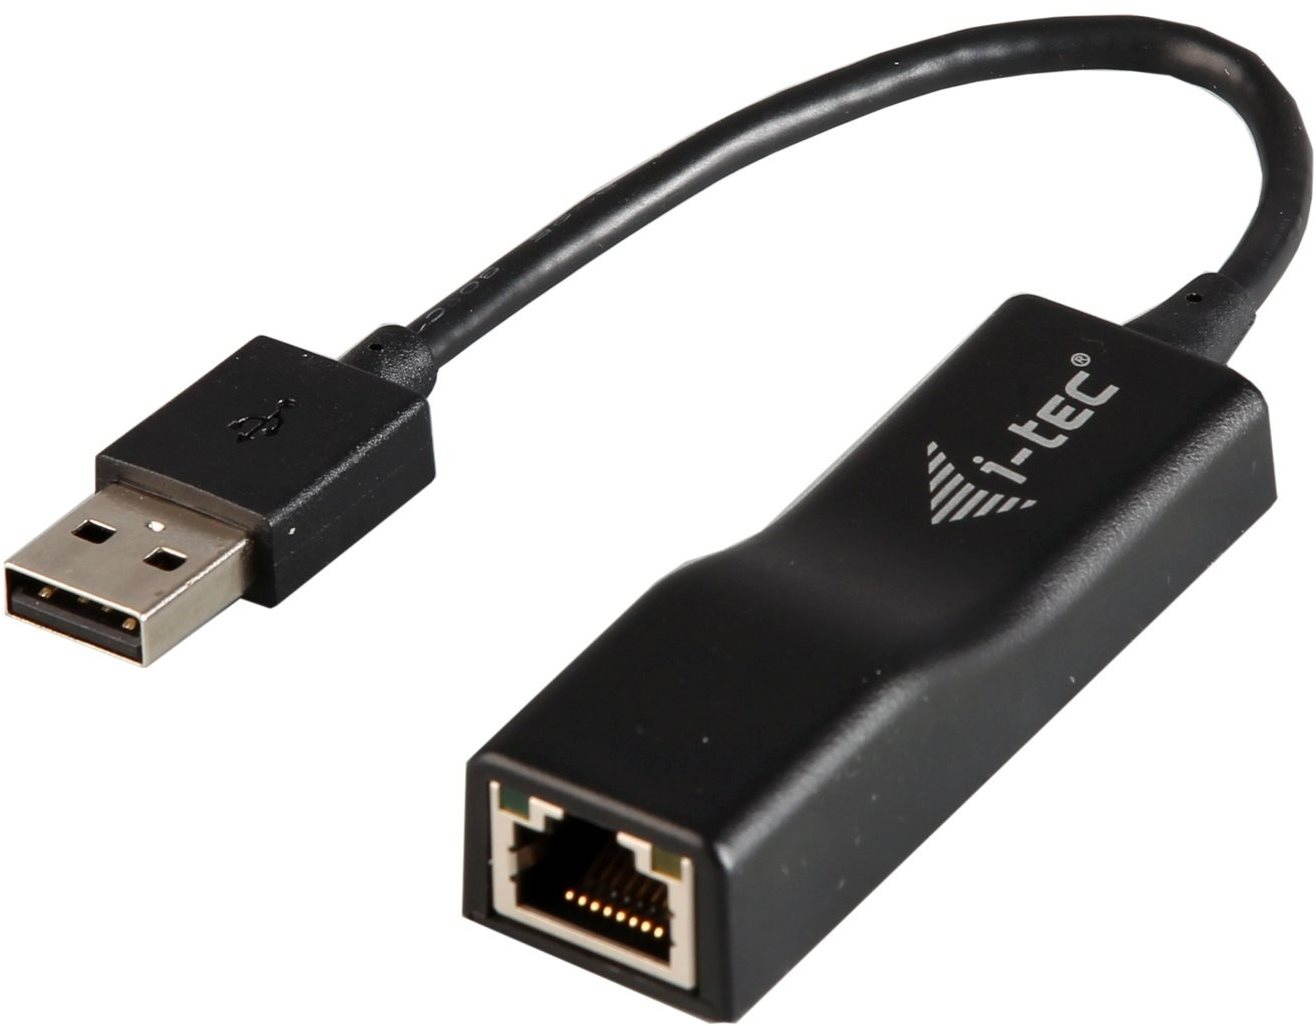 TEC USB 2.0 Fast Ethernet Adapter